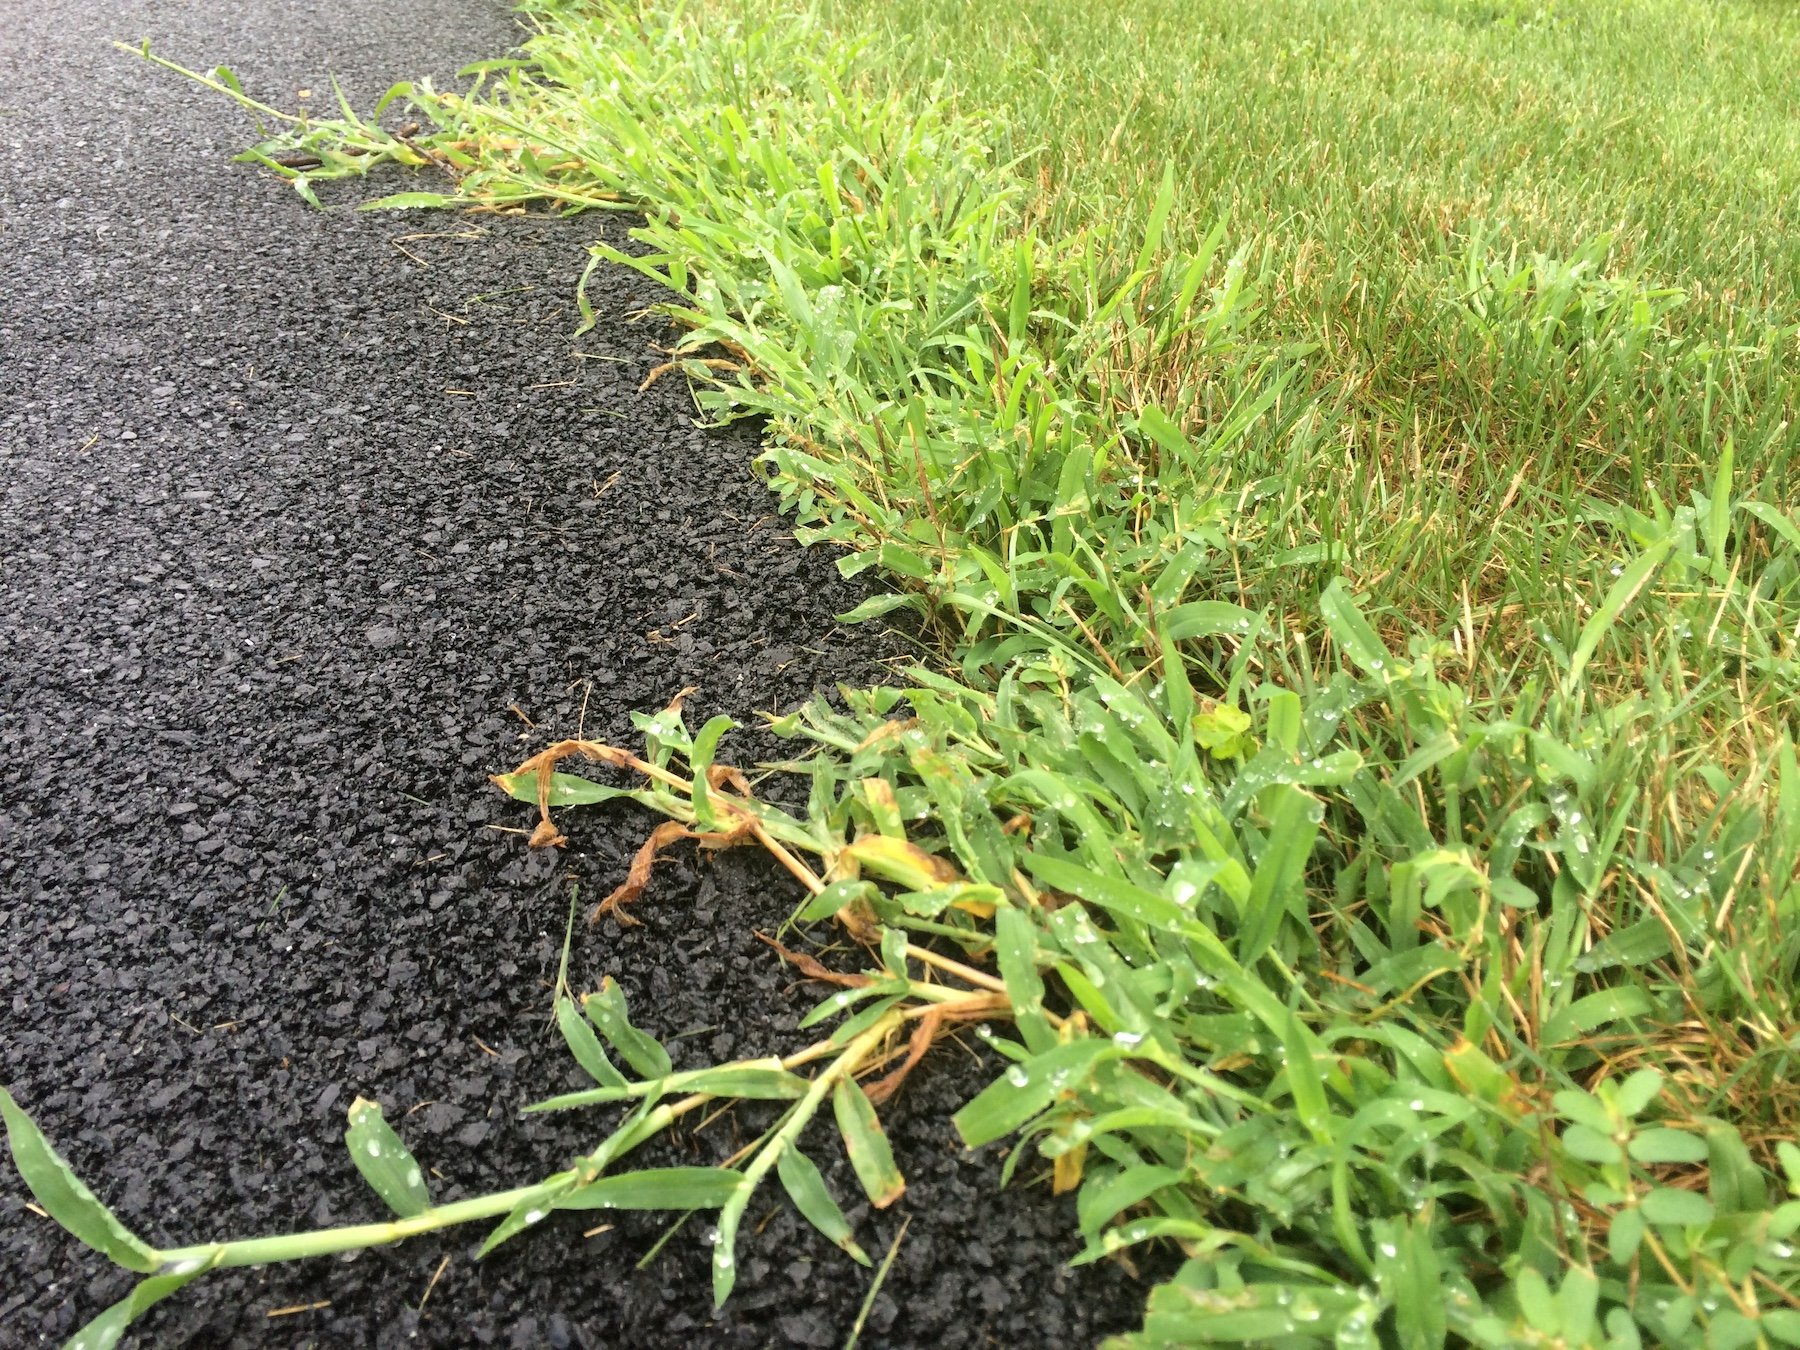 Crabgrass along edge of pavement